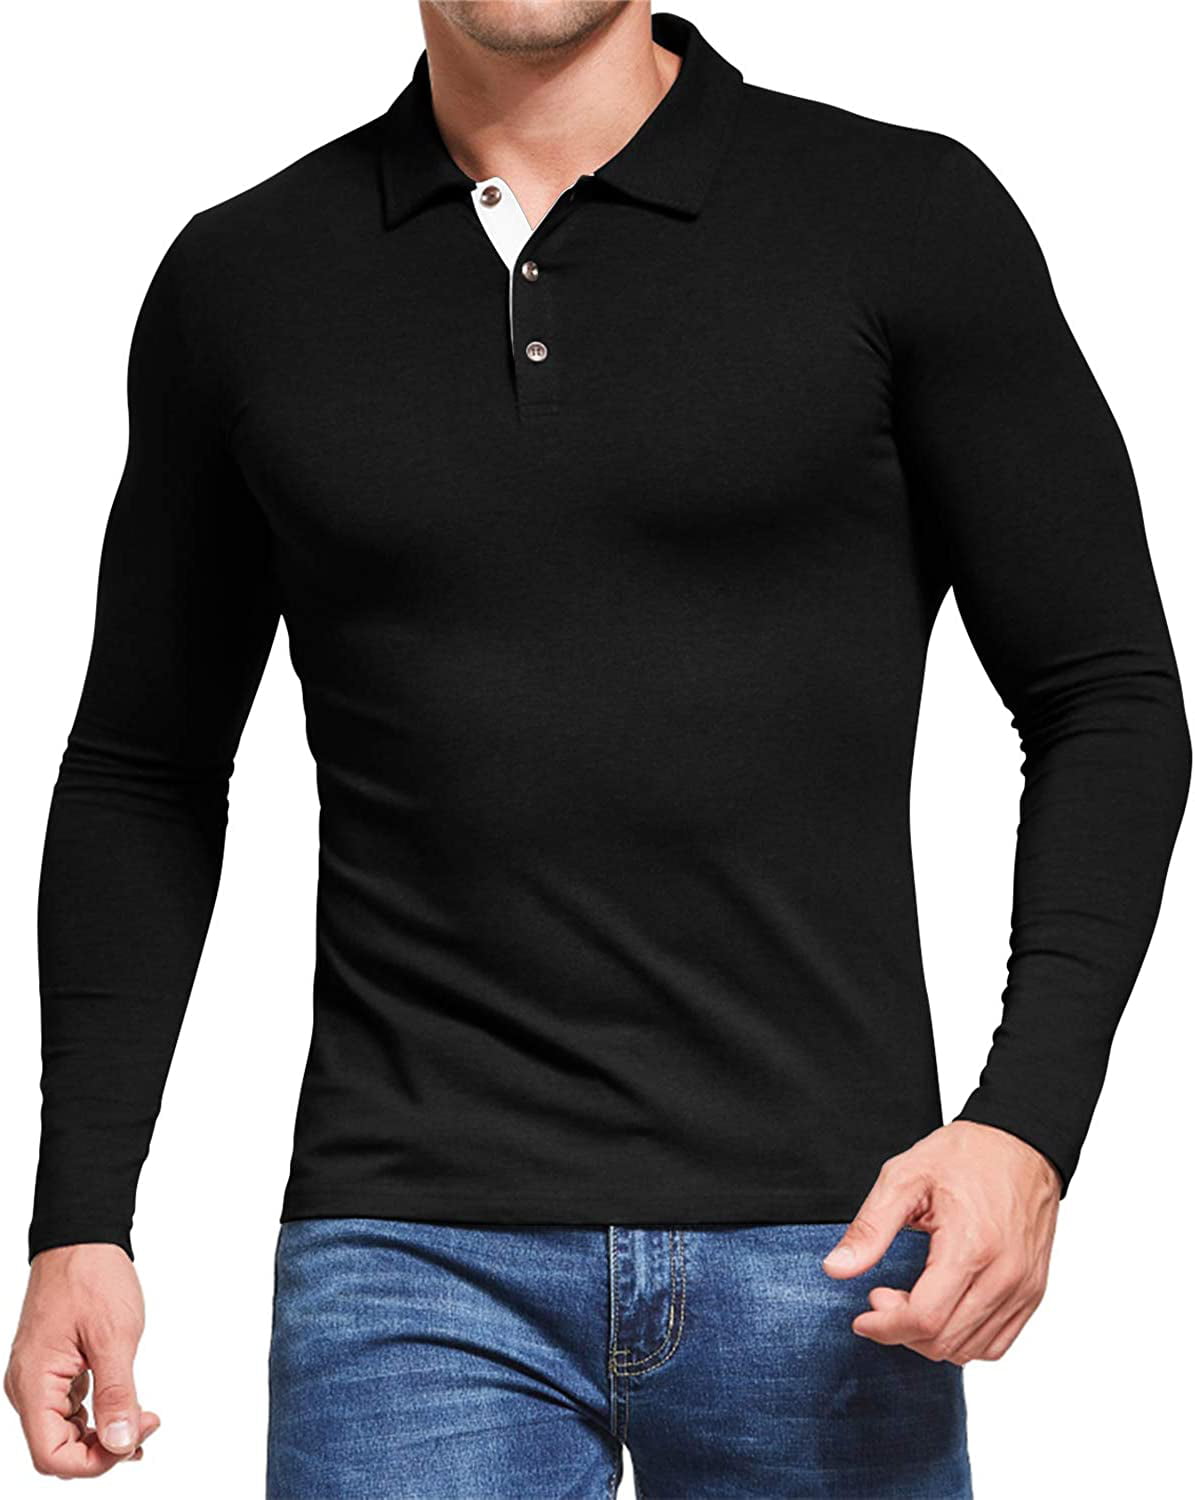 Aiyino Men's Long Sleeve Polo Shirts Casual Slim Fit Basic Designed Cotton Shirts - image 1 of 3